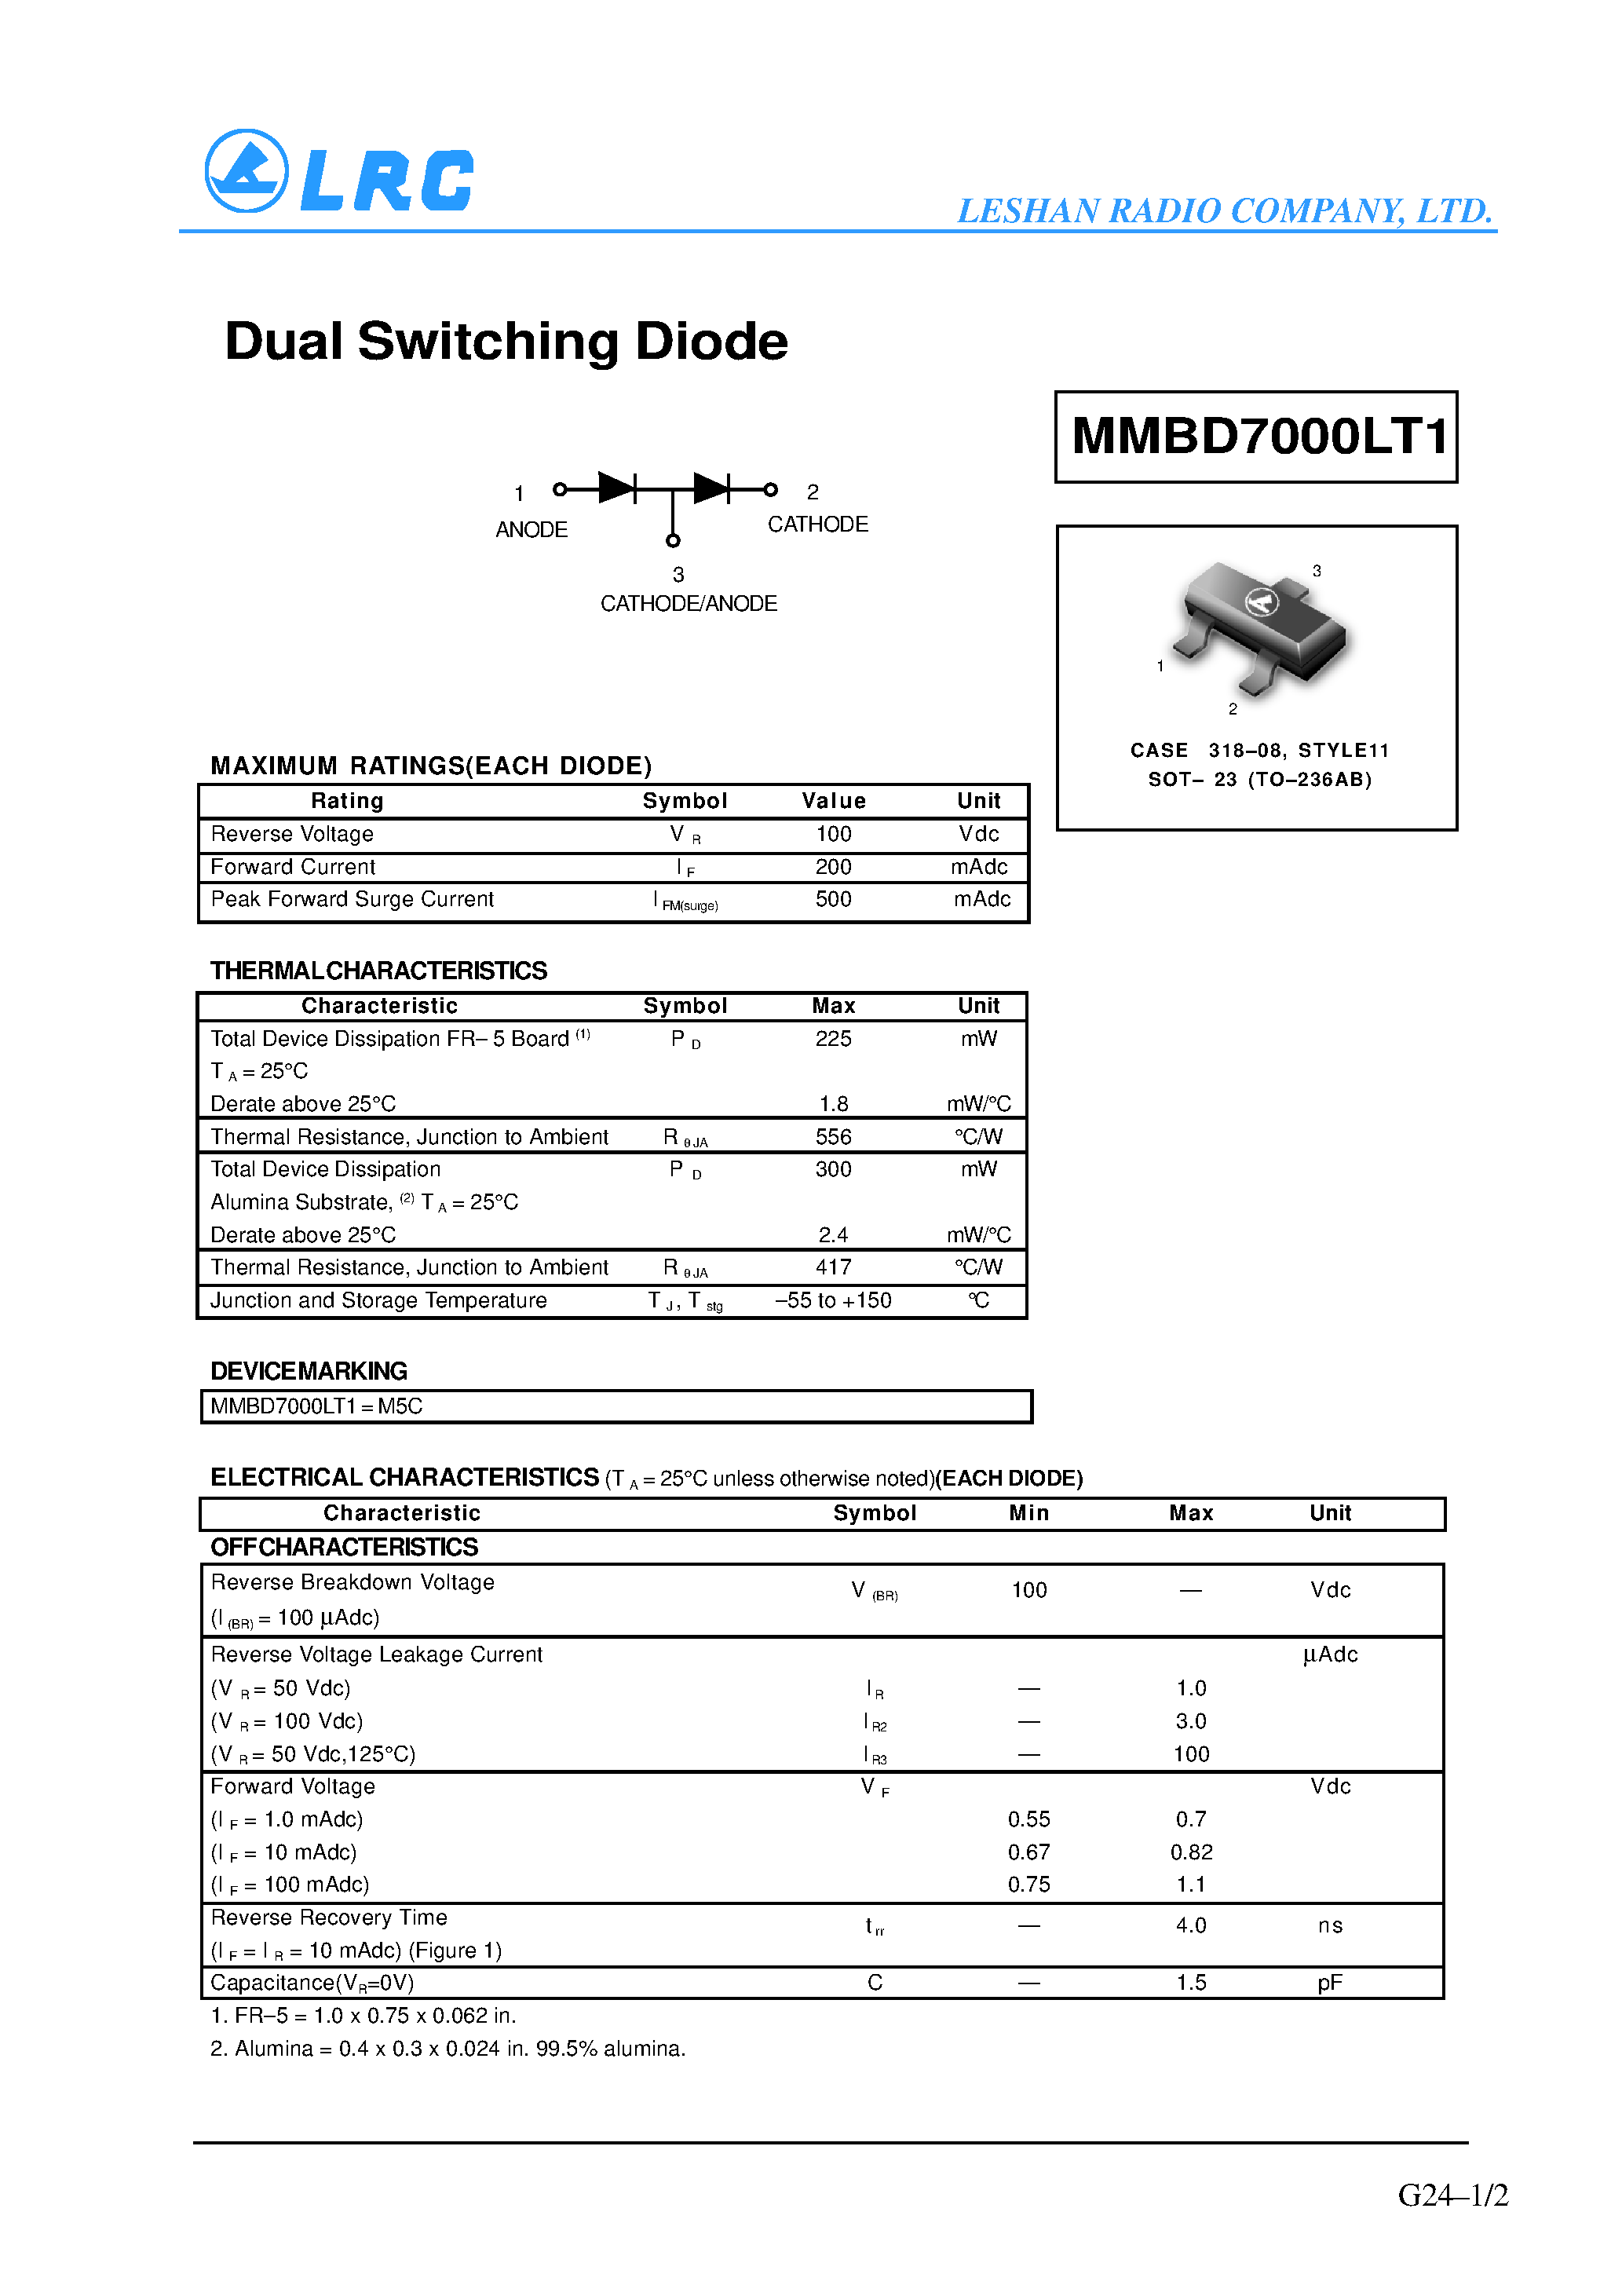 Даташит MMBD7000LT1 - Dual Switching Diode страница 1